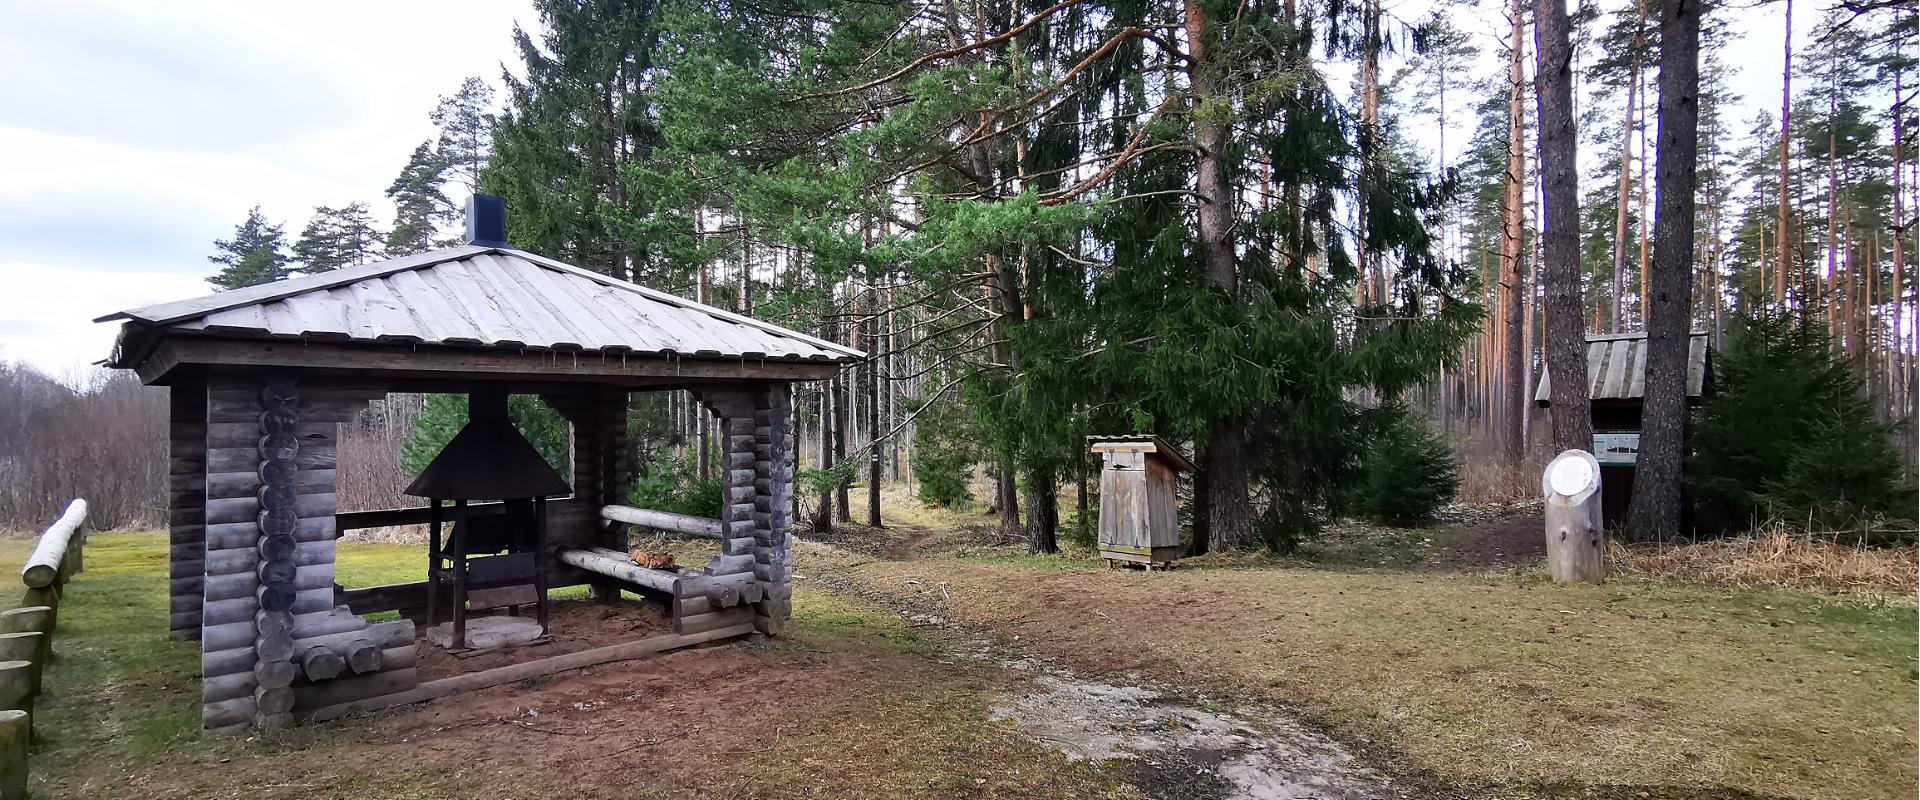 Wanderweg des Staatlichen Forstamtes in Kilingi-Nõmme